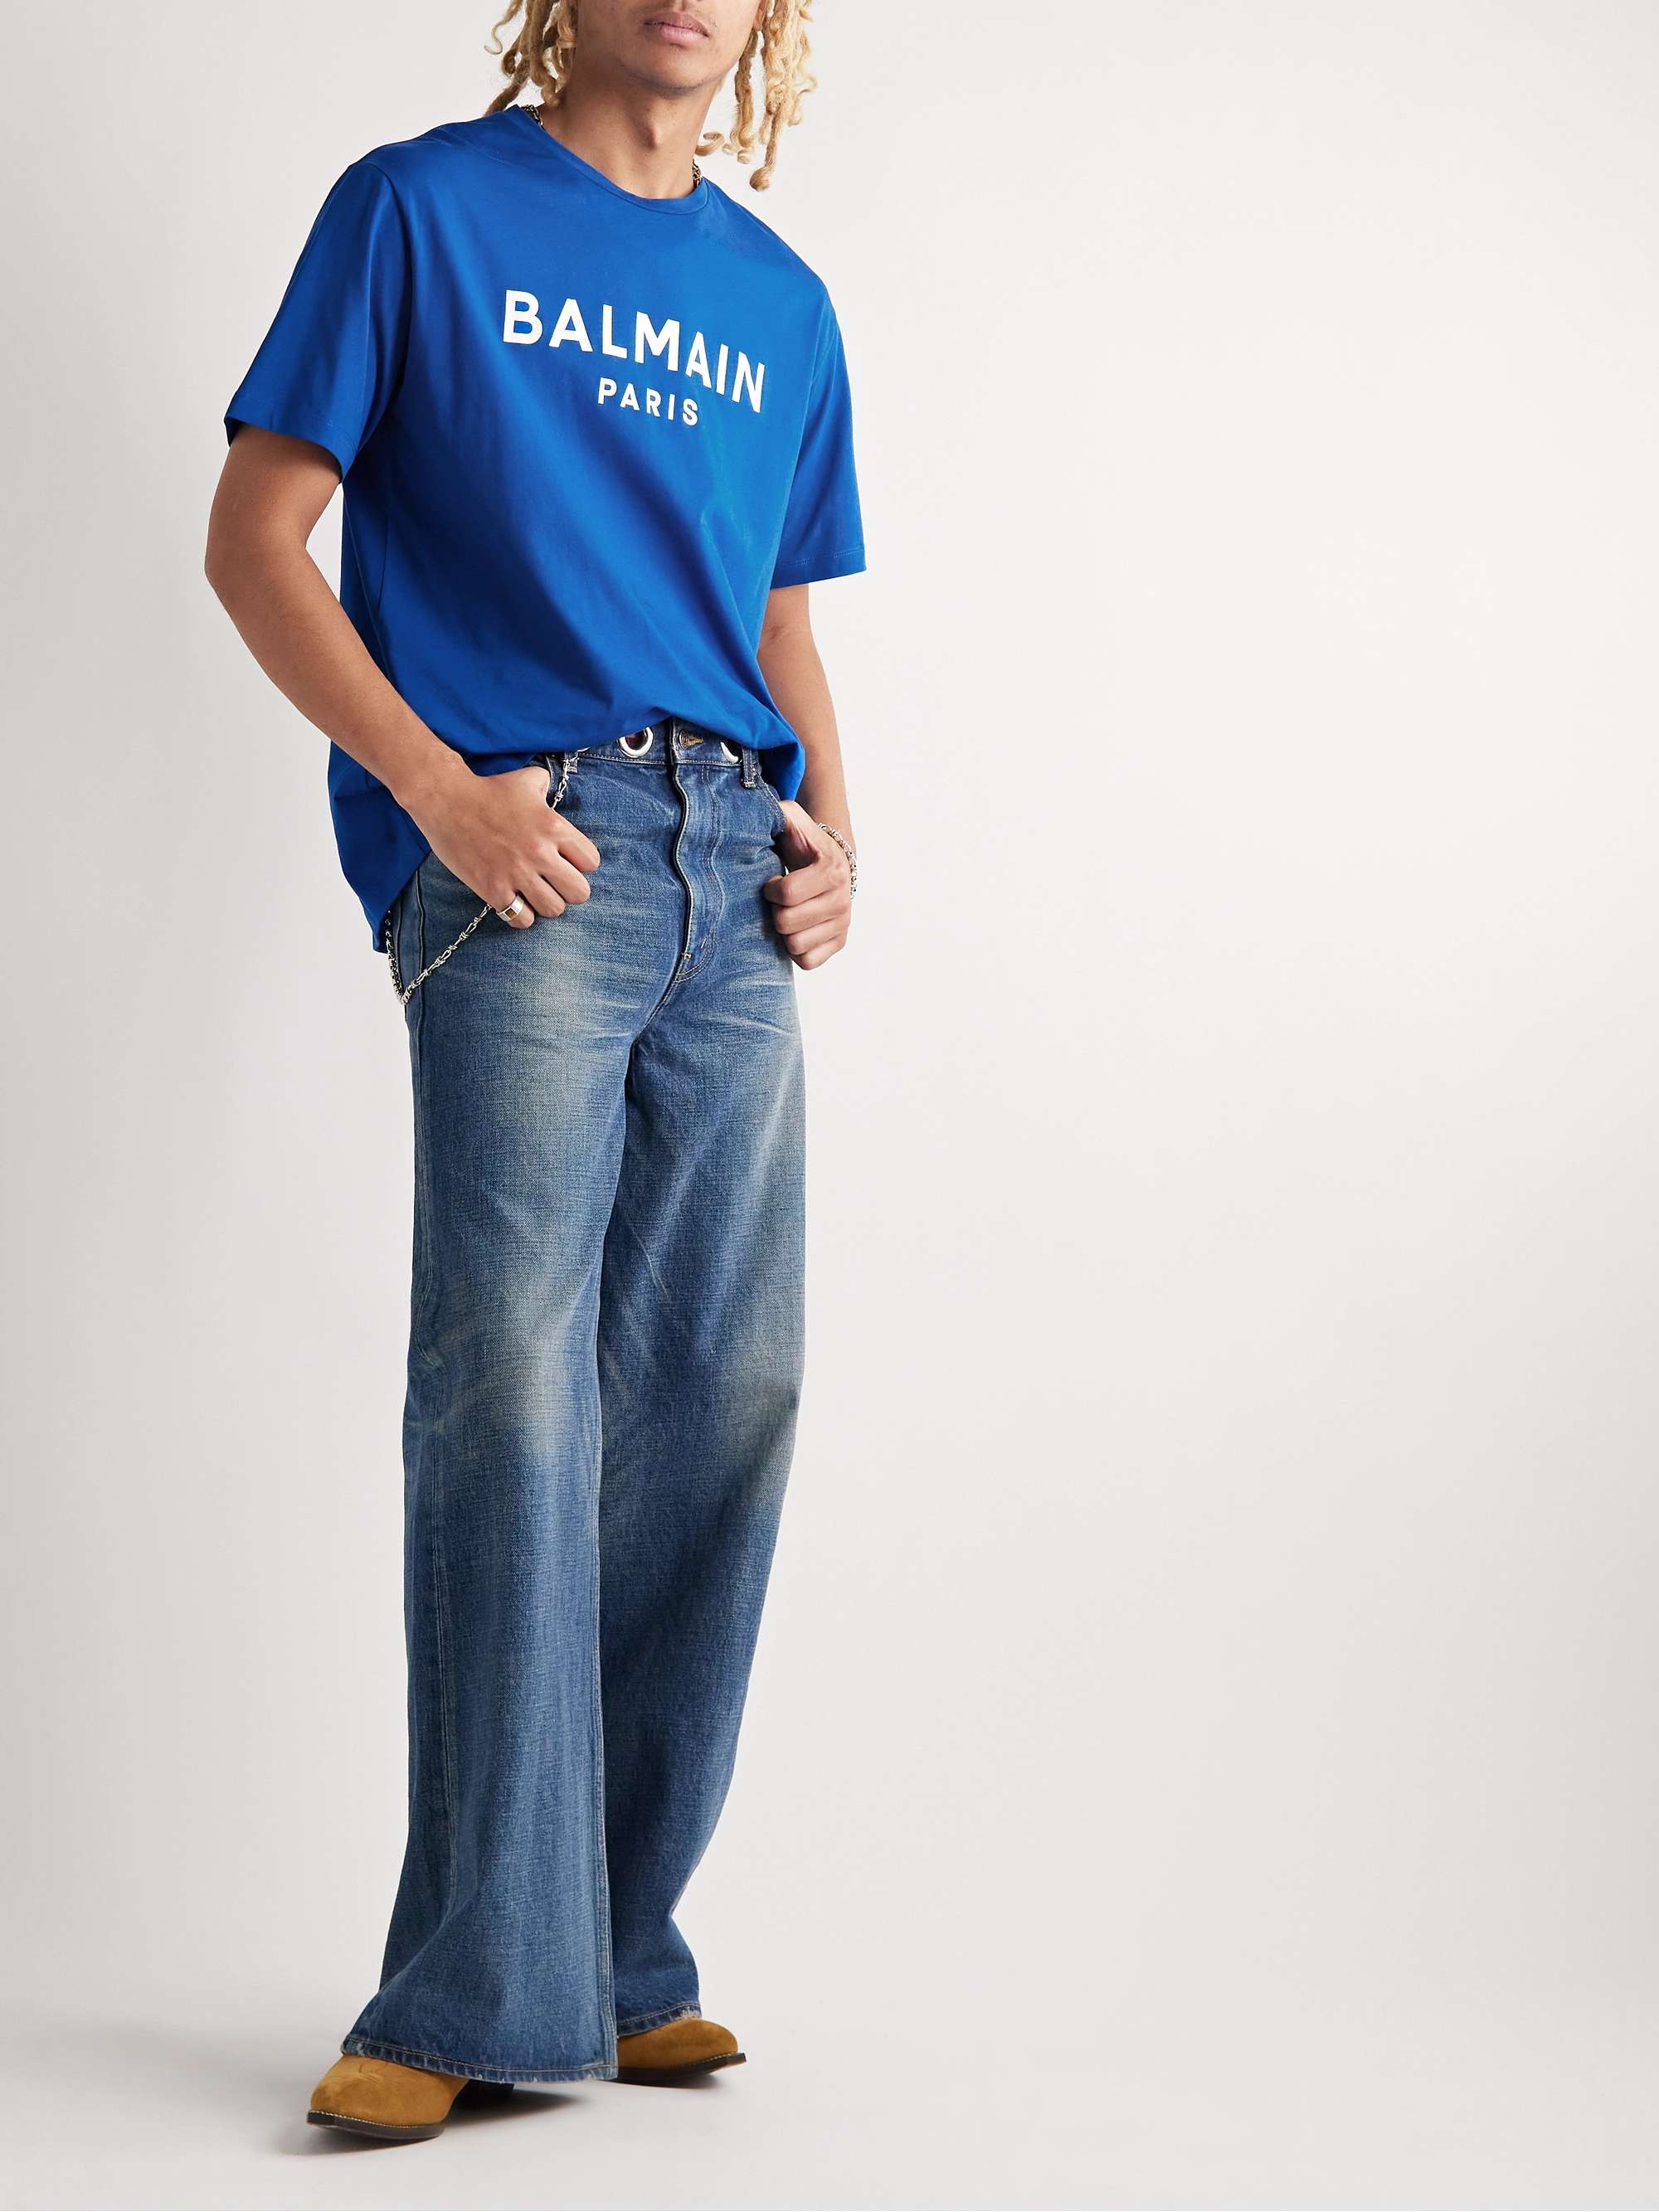 BALMAIN Logo-Print Cotton-Jersey T-Shirt | MR PORTER